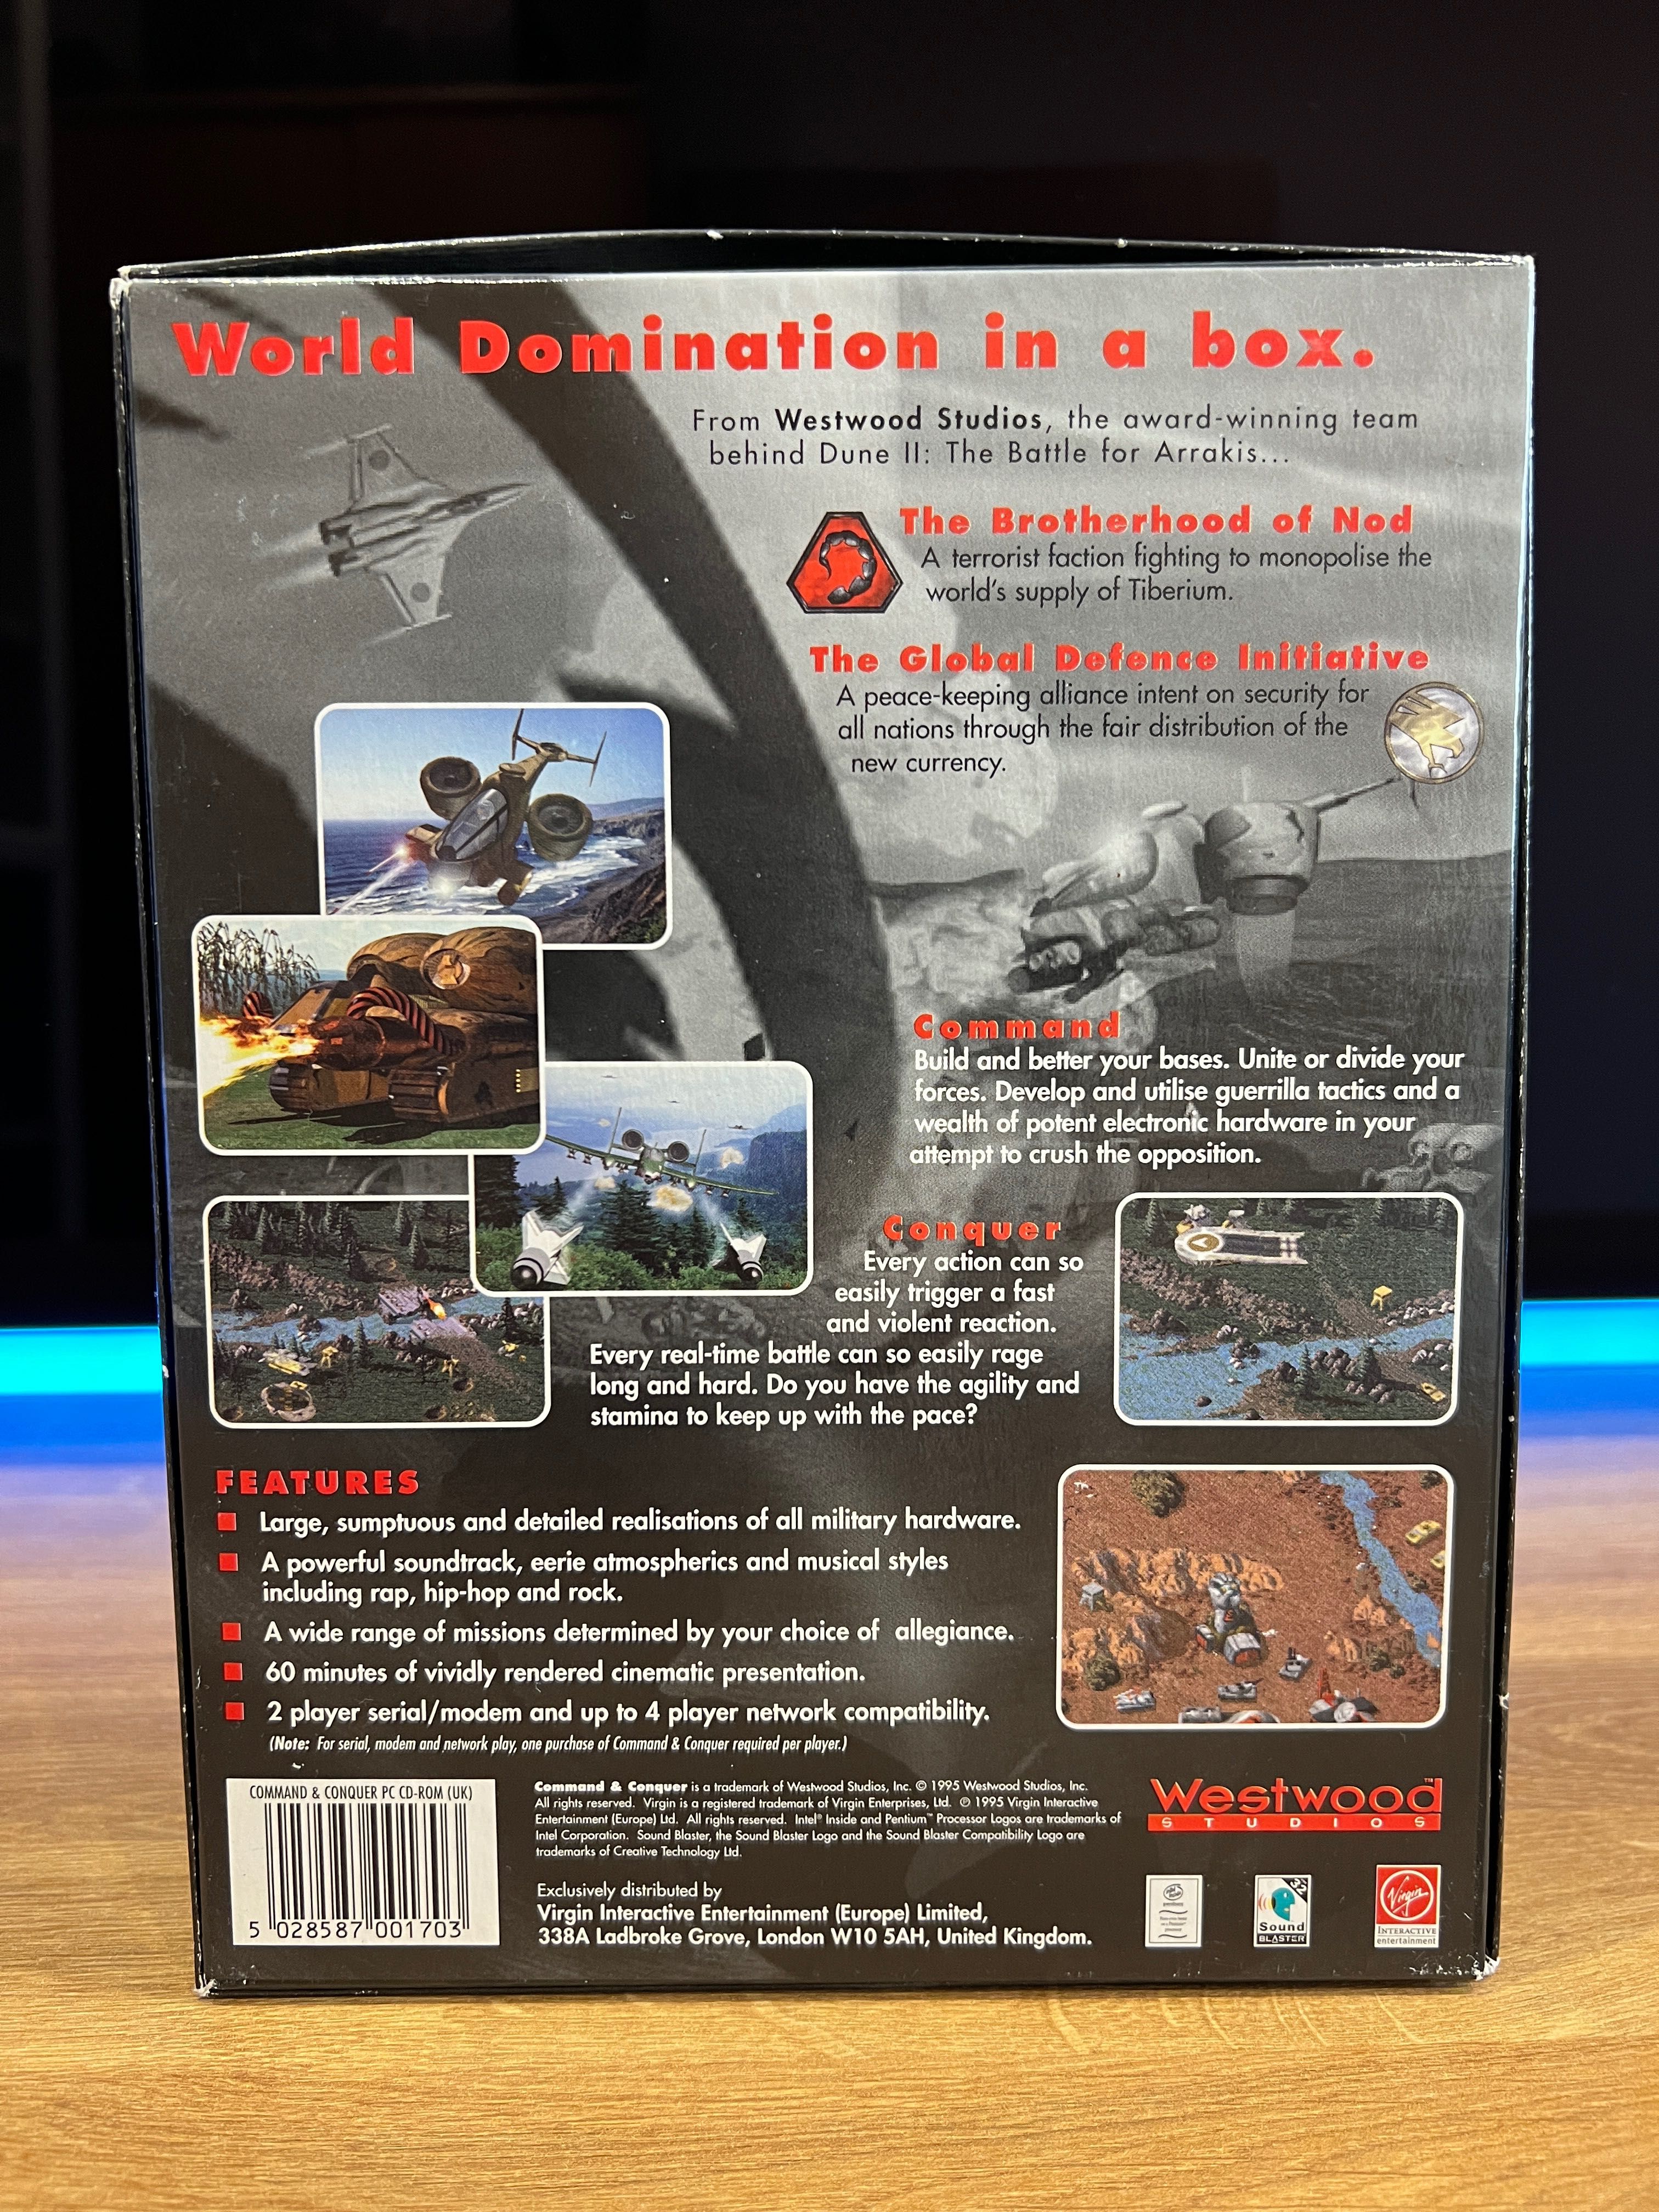 Command & Conquer 1 (PC EN 1995) Big Box kompletne premierowe wydanie